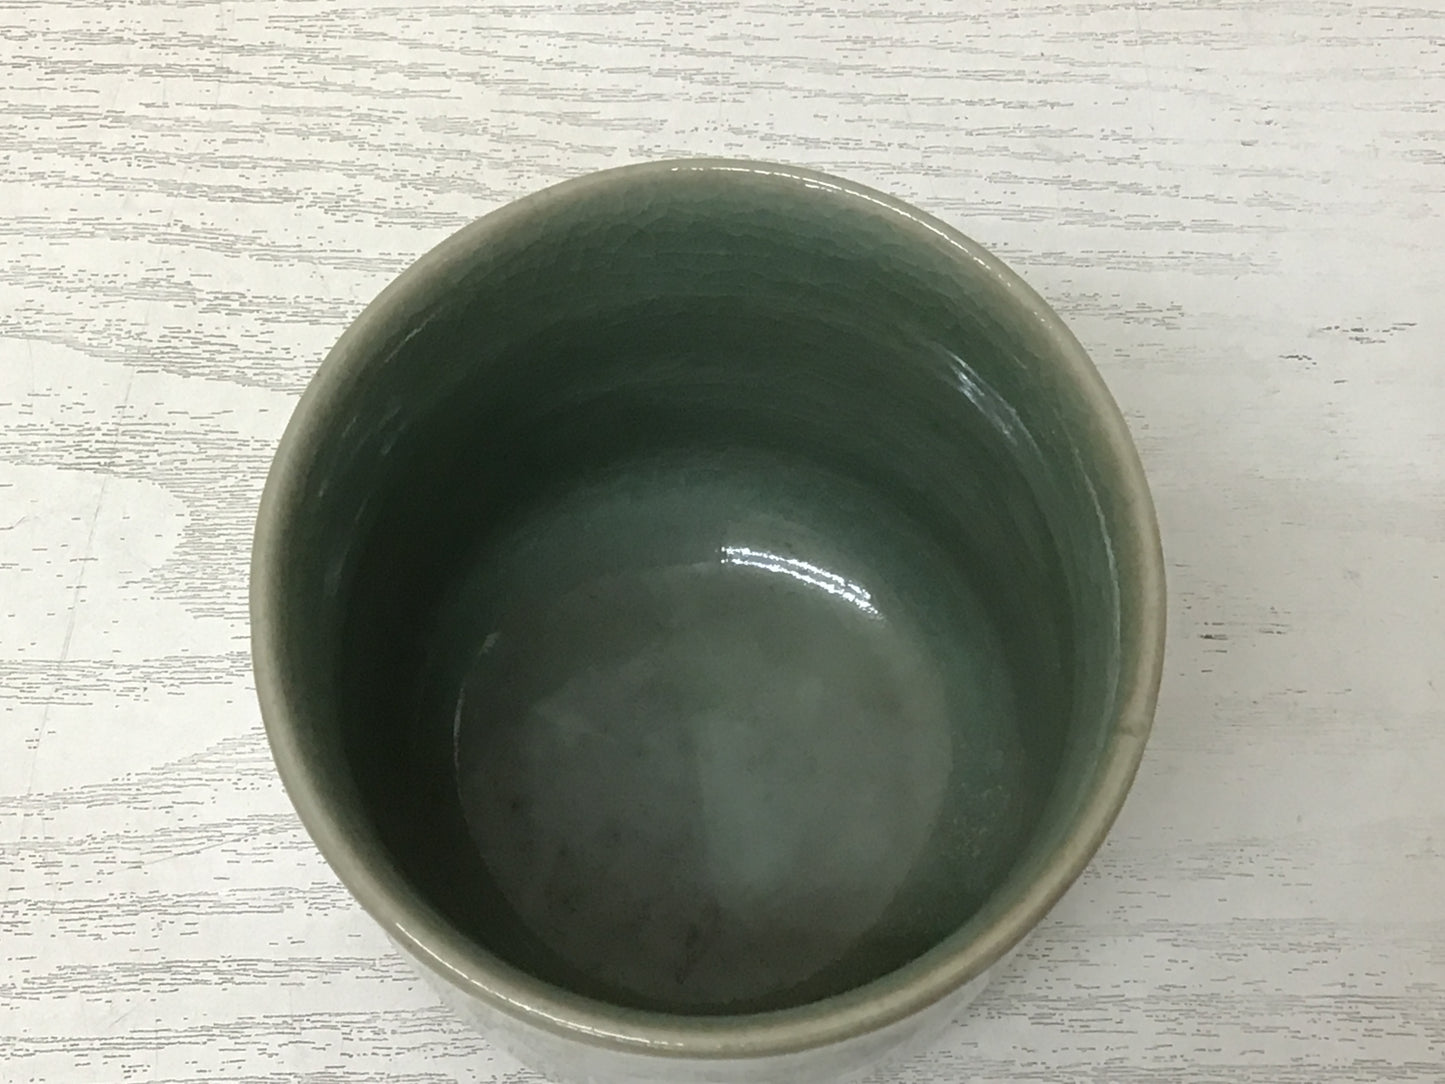 Y1789 CHAWAN Goryeo celadon Ryu Kaigo signed box Japan bowl pottery tea ceremony